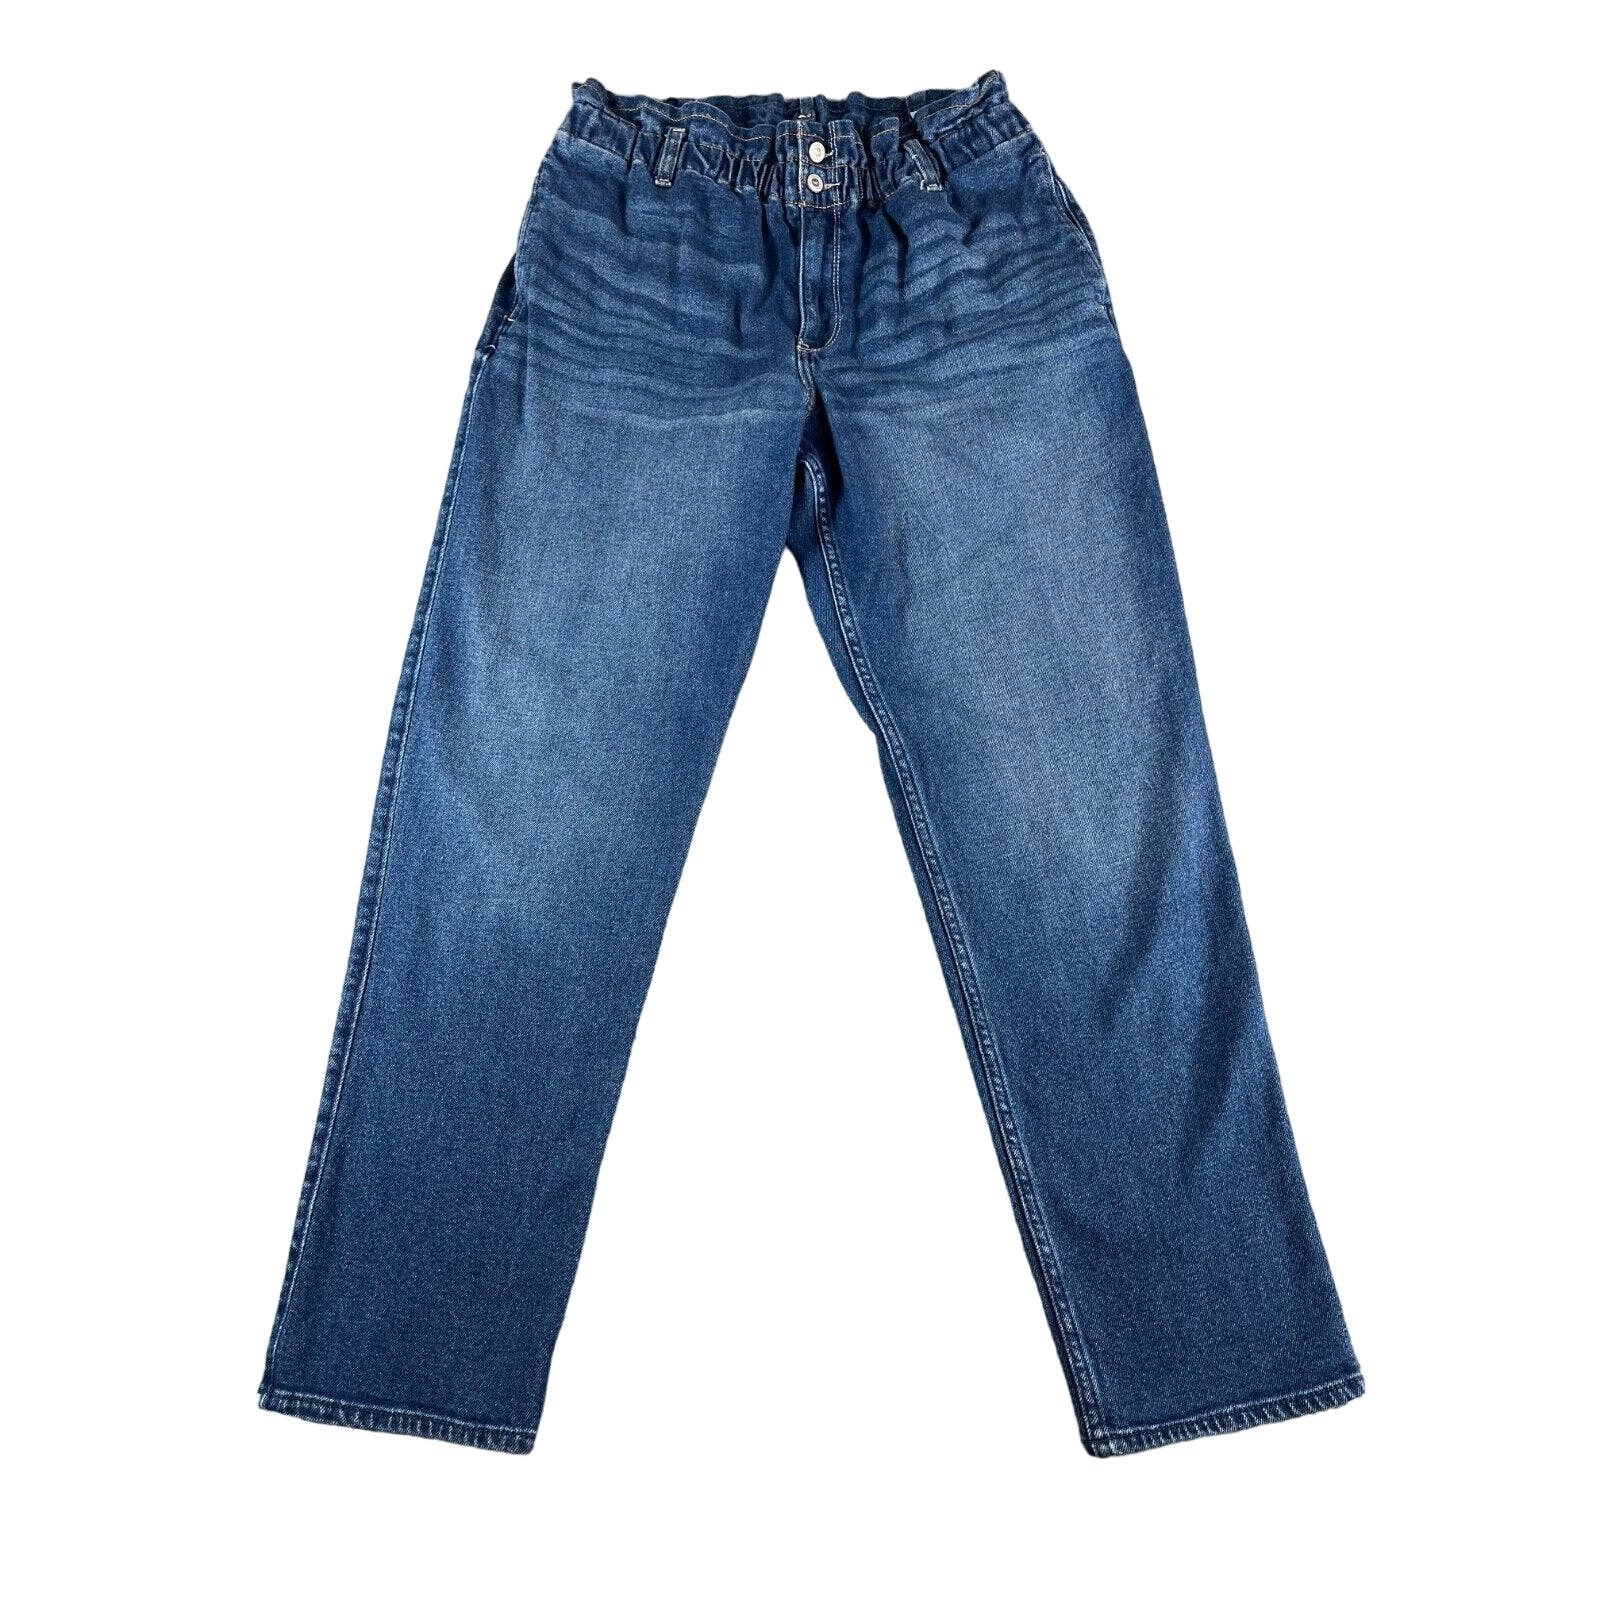 Exclusive Hollister Jeans Womens 13R (31 x 27) Blue Den